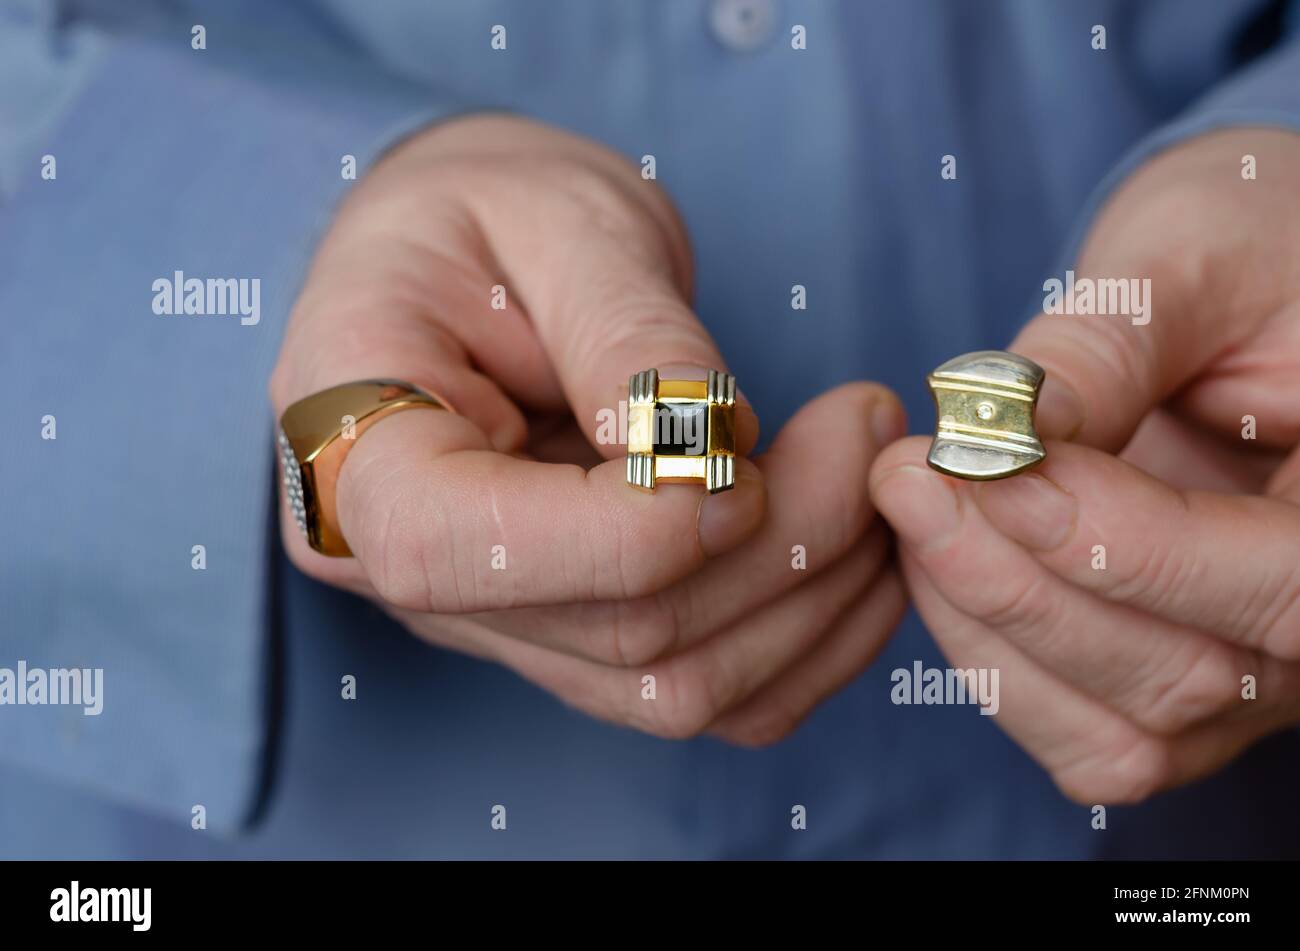 925 Silver gold Bow Design Adjustable Size Ring for index finger for women  | eBay